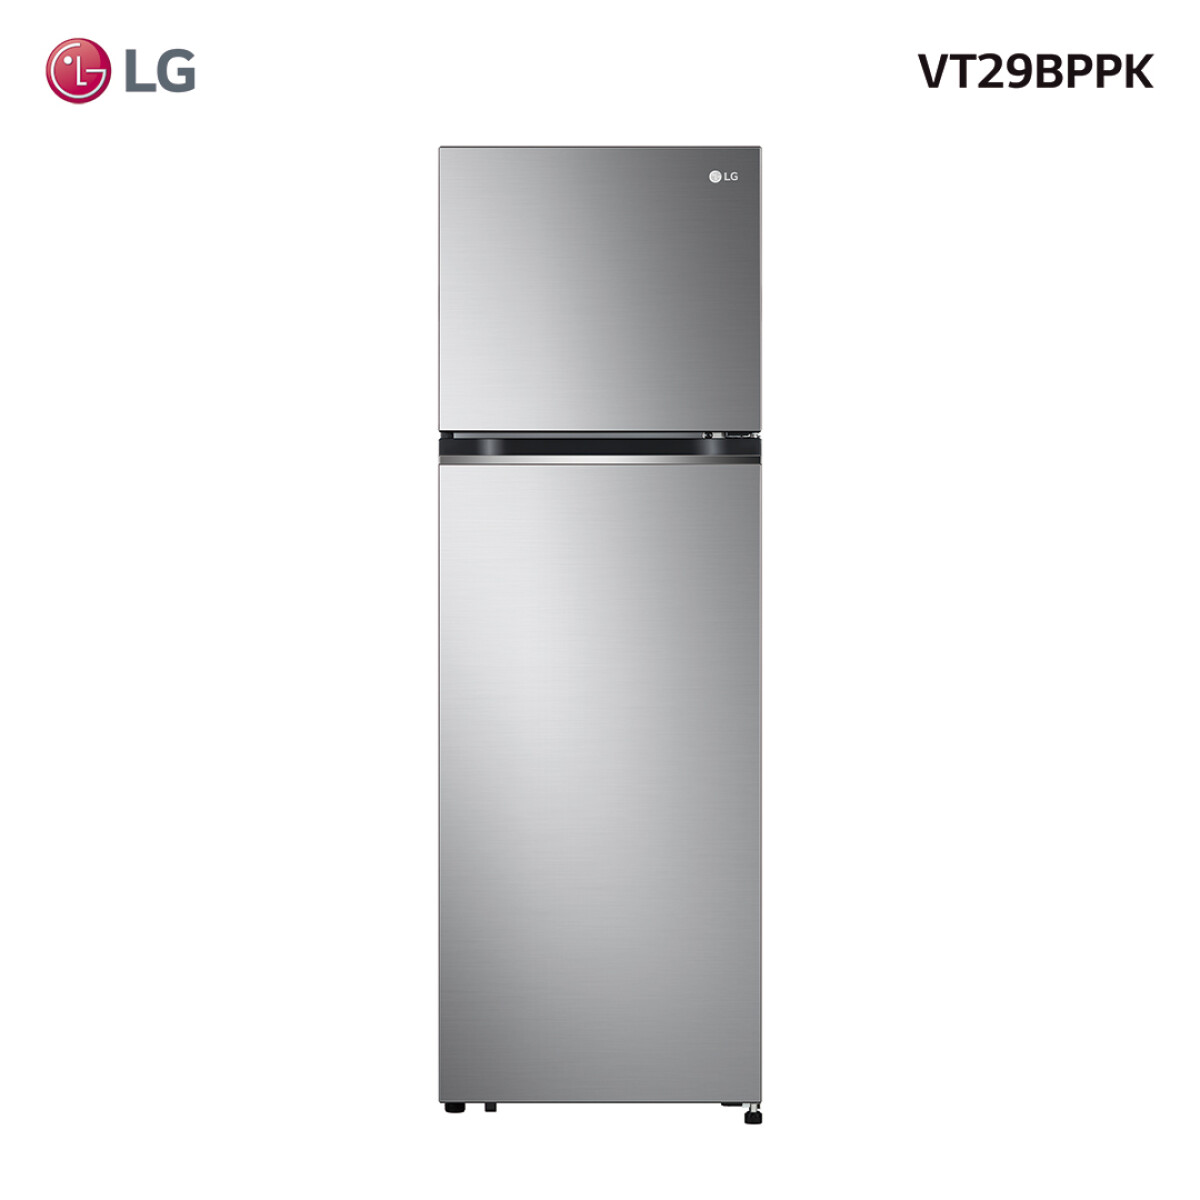 Refrigerador LG inverter 285L VT29BPPK - 001 